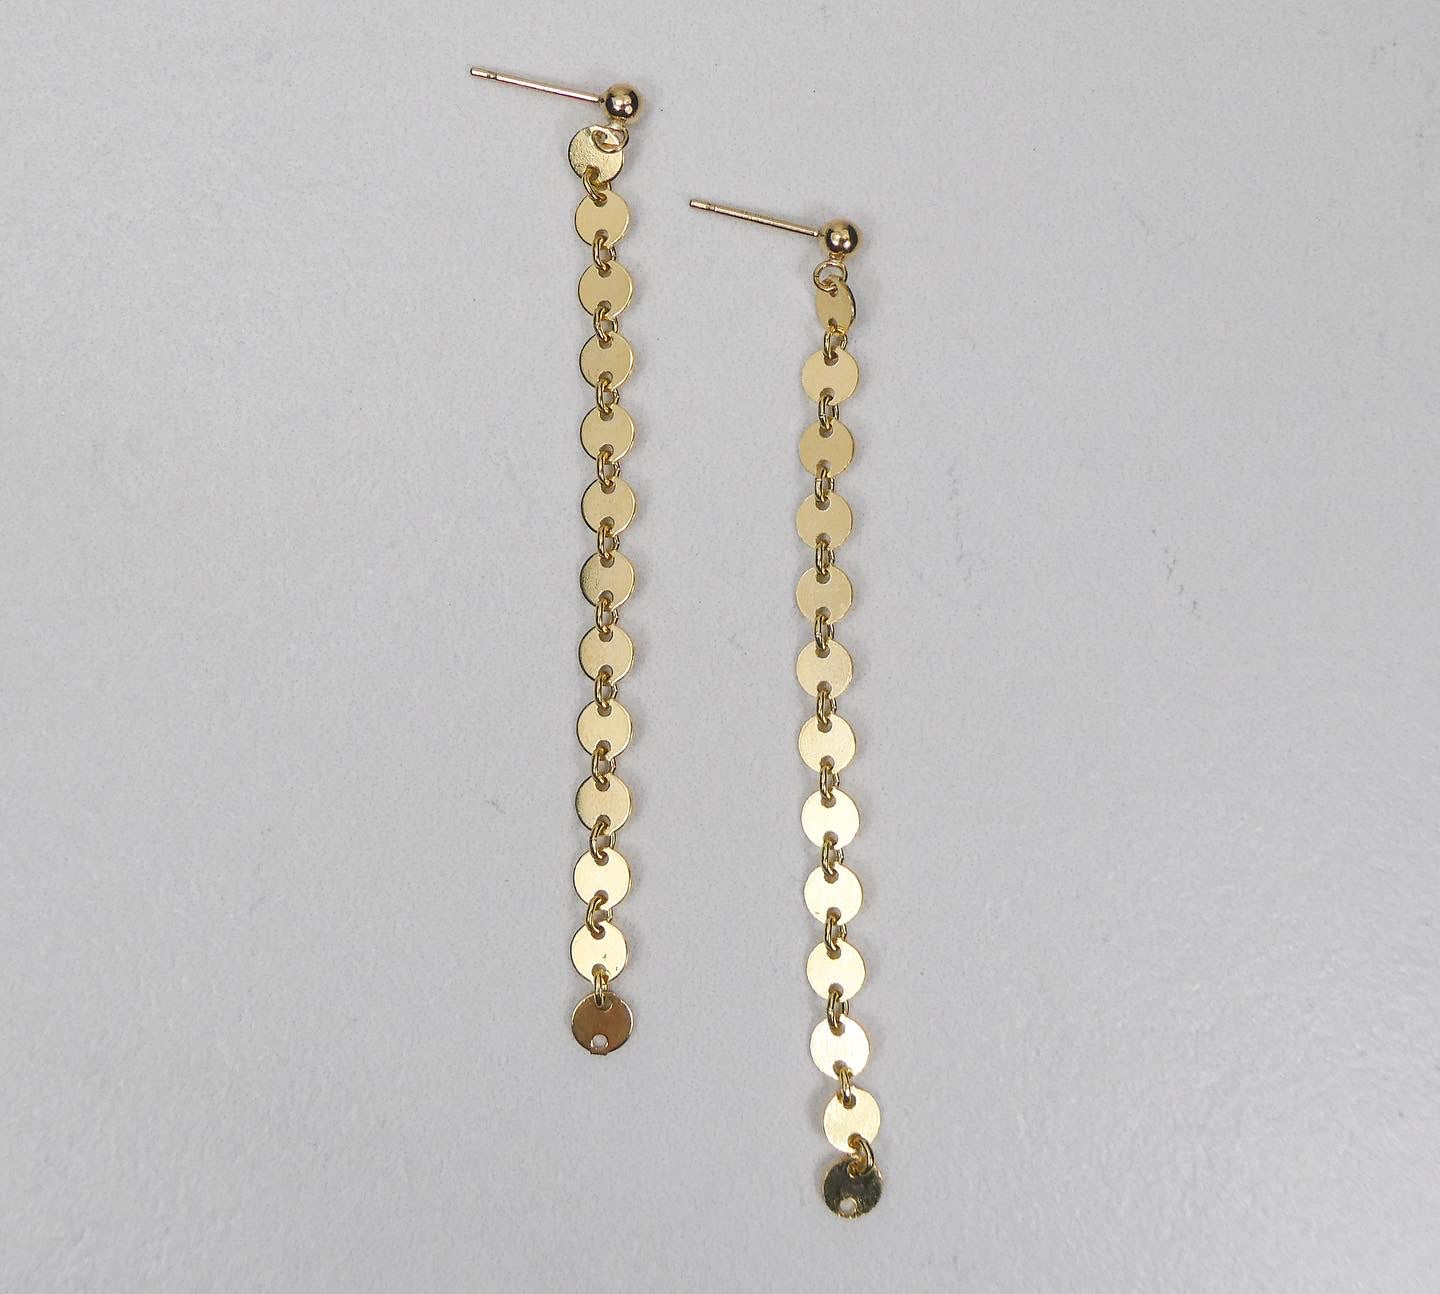 Orion Golden Earrings in 14K Gold Filled